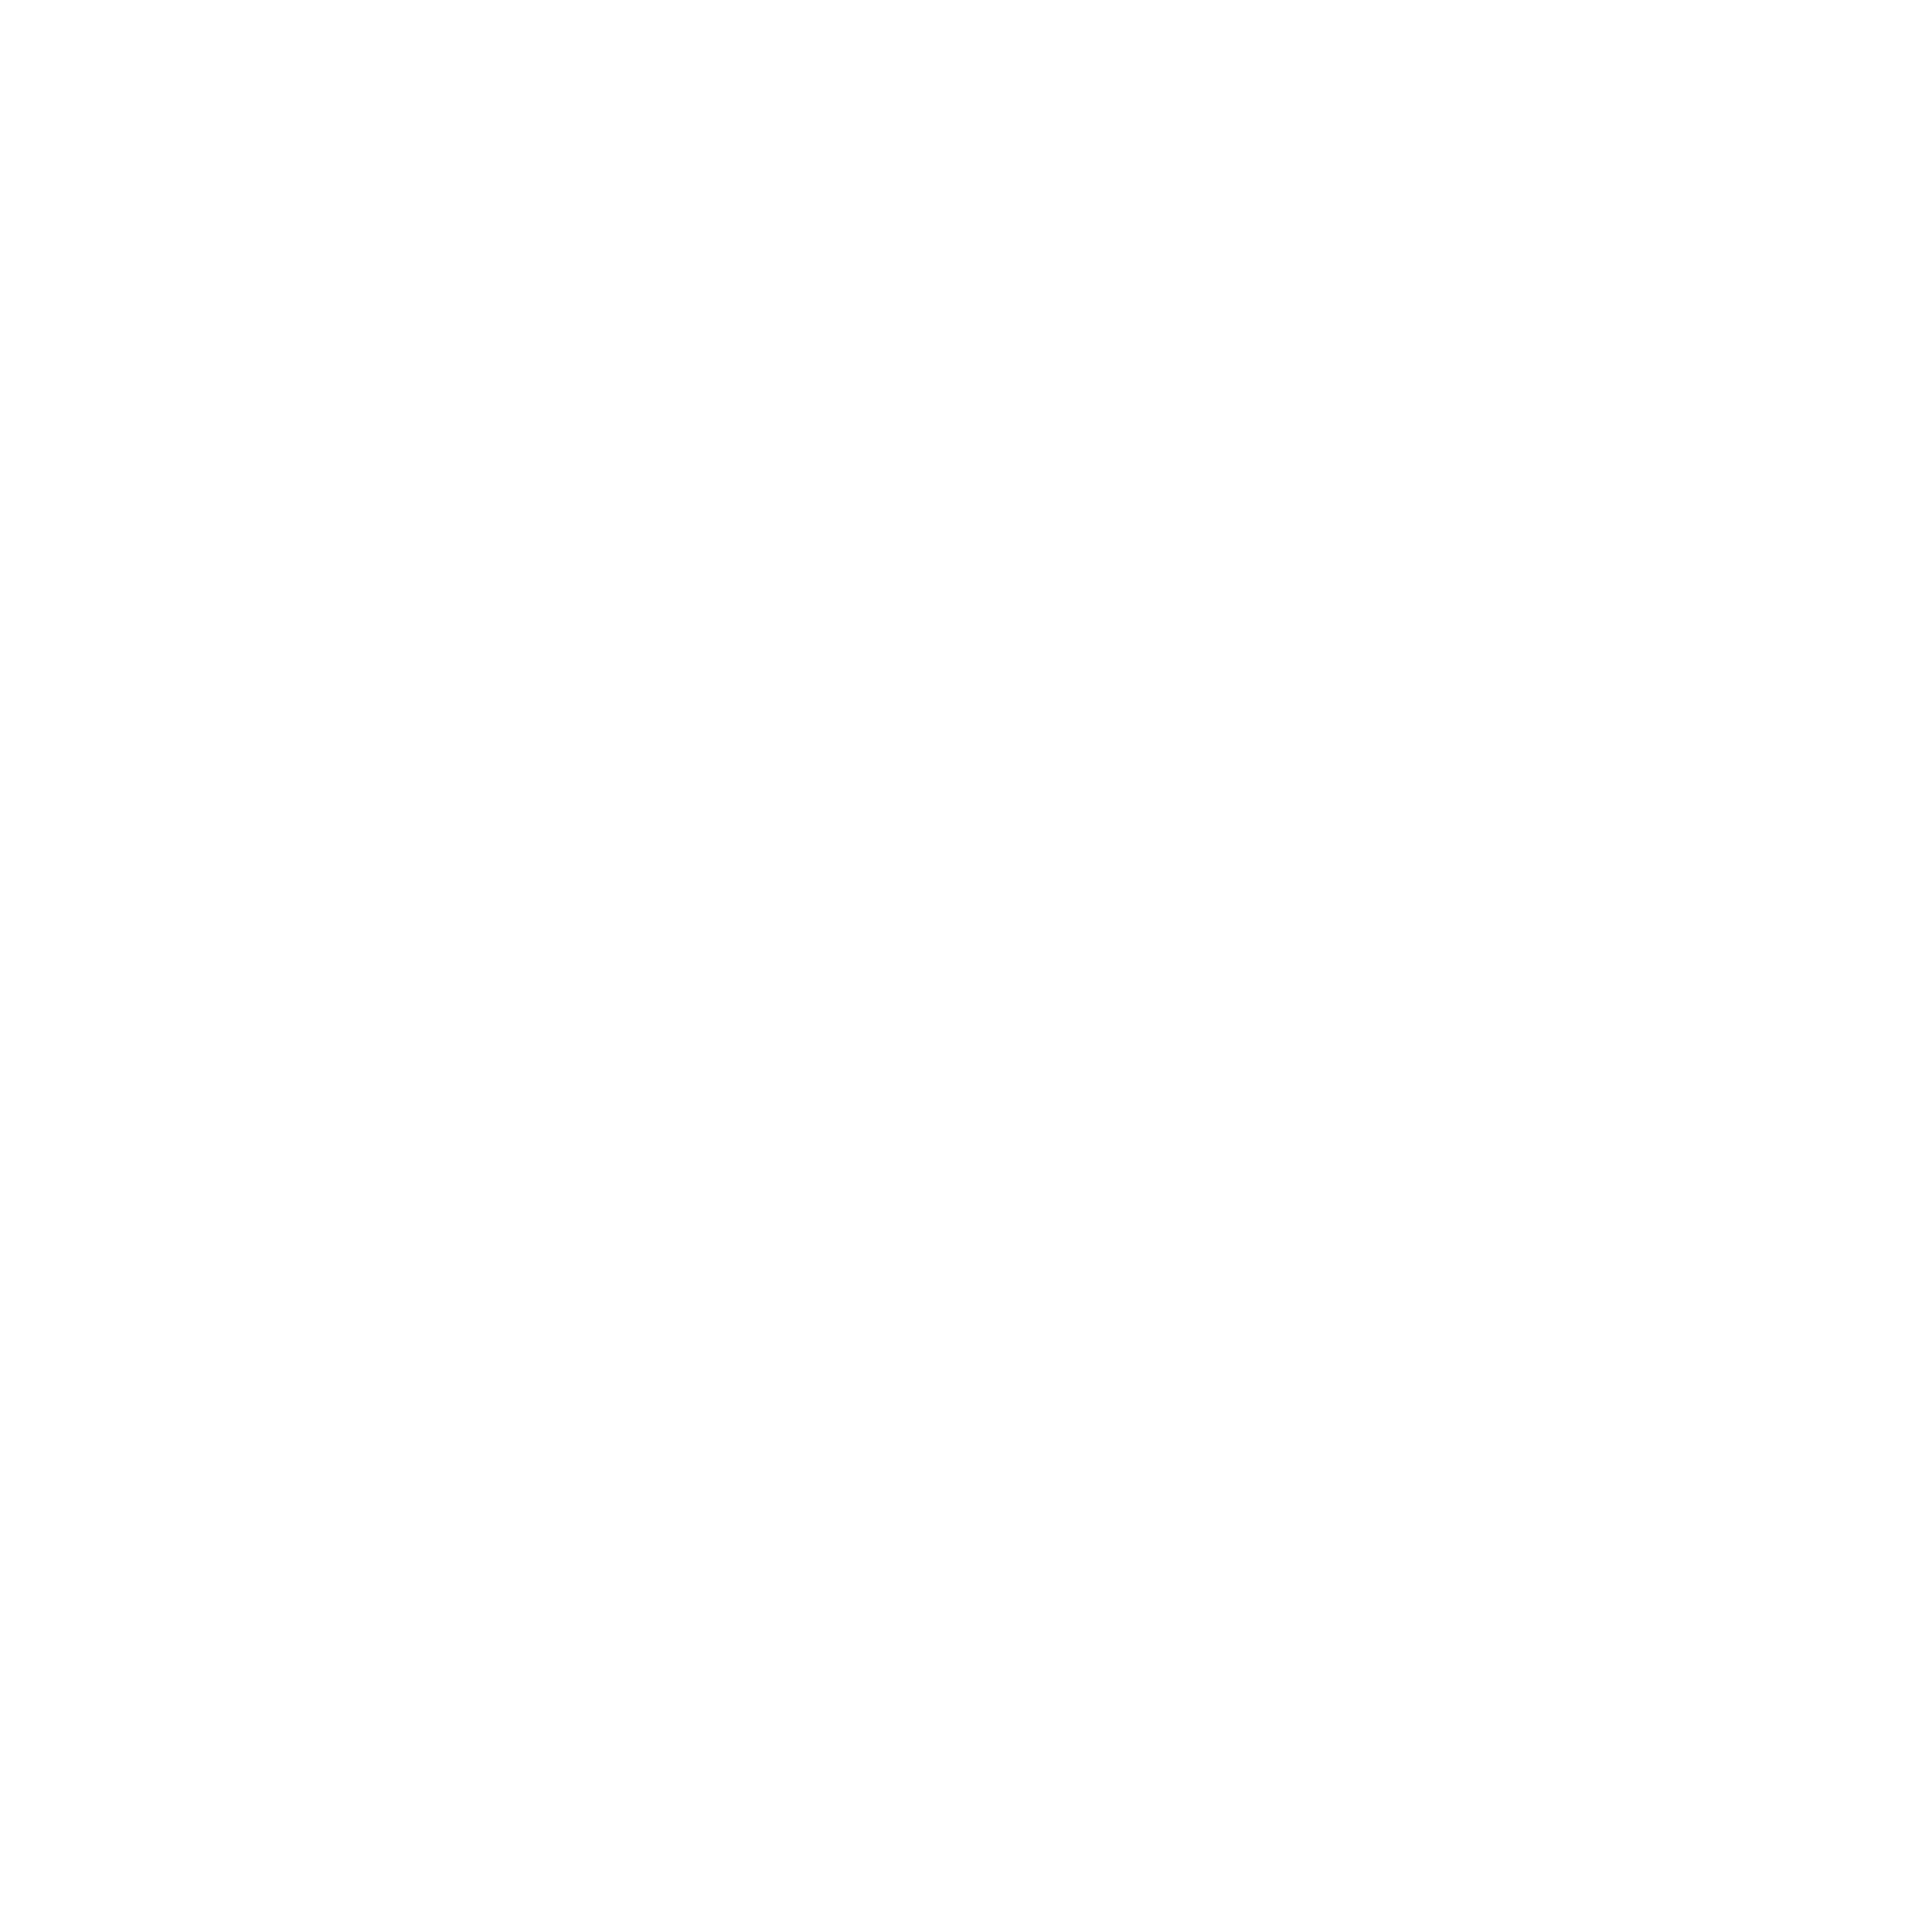 Hallmark Channel Logo - Hallmark Channel Logo PNG Transparent & SVG Vector - Freebie Supply